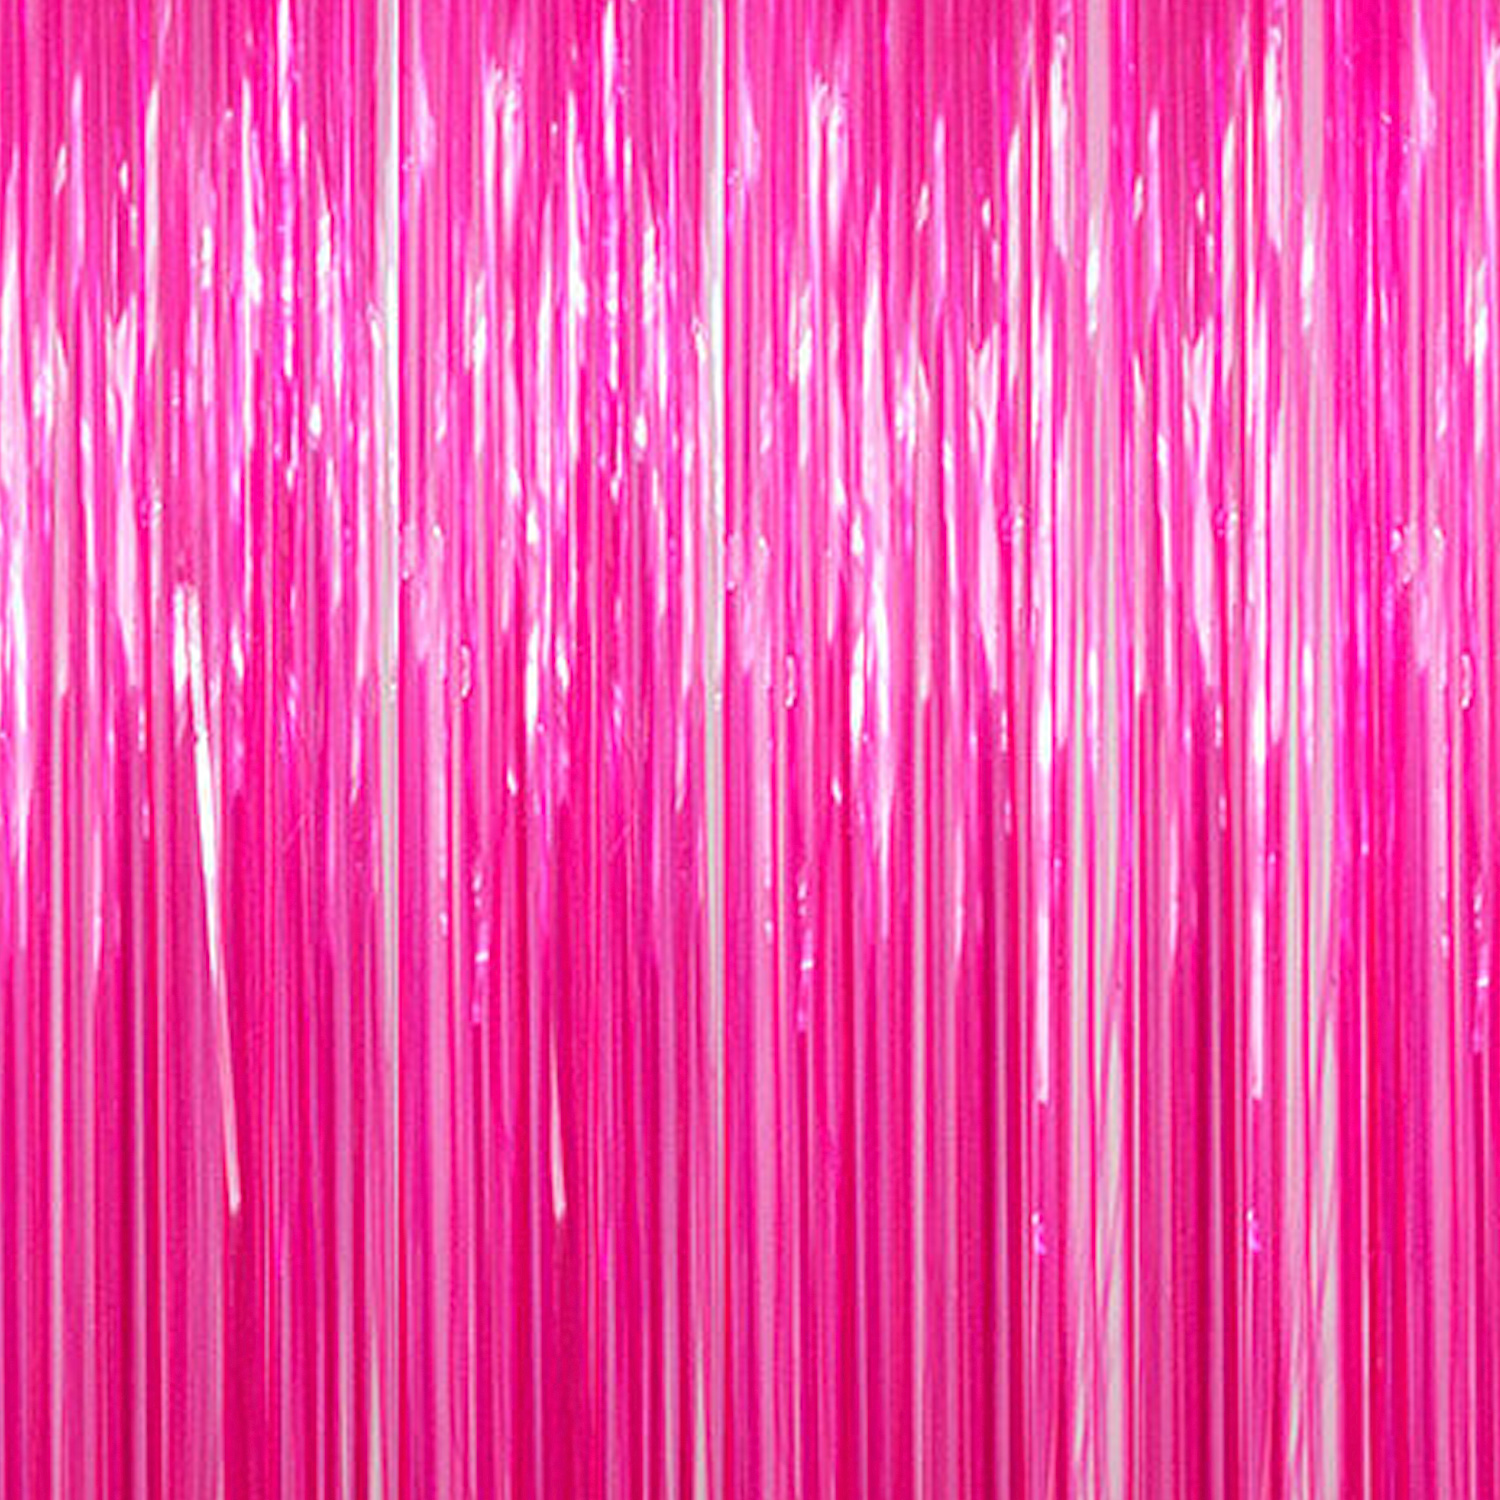 10' x 15 Light Pink Fringe (Each)